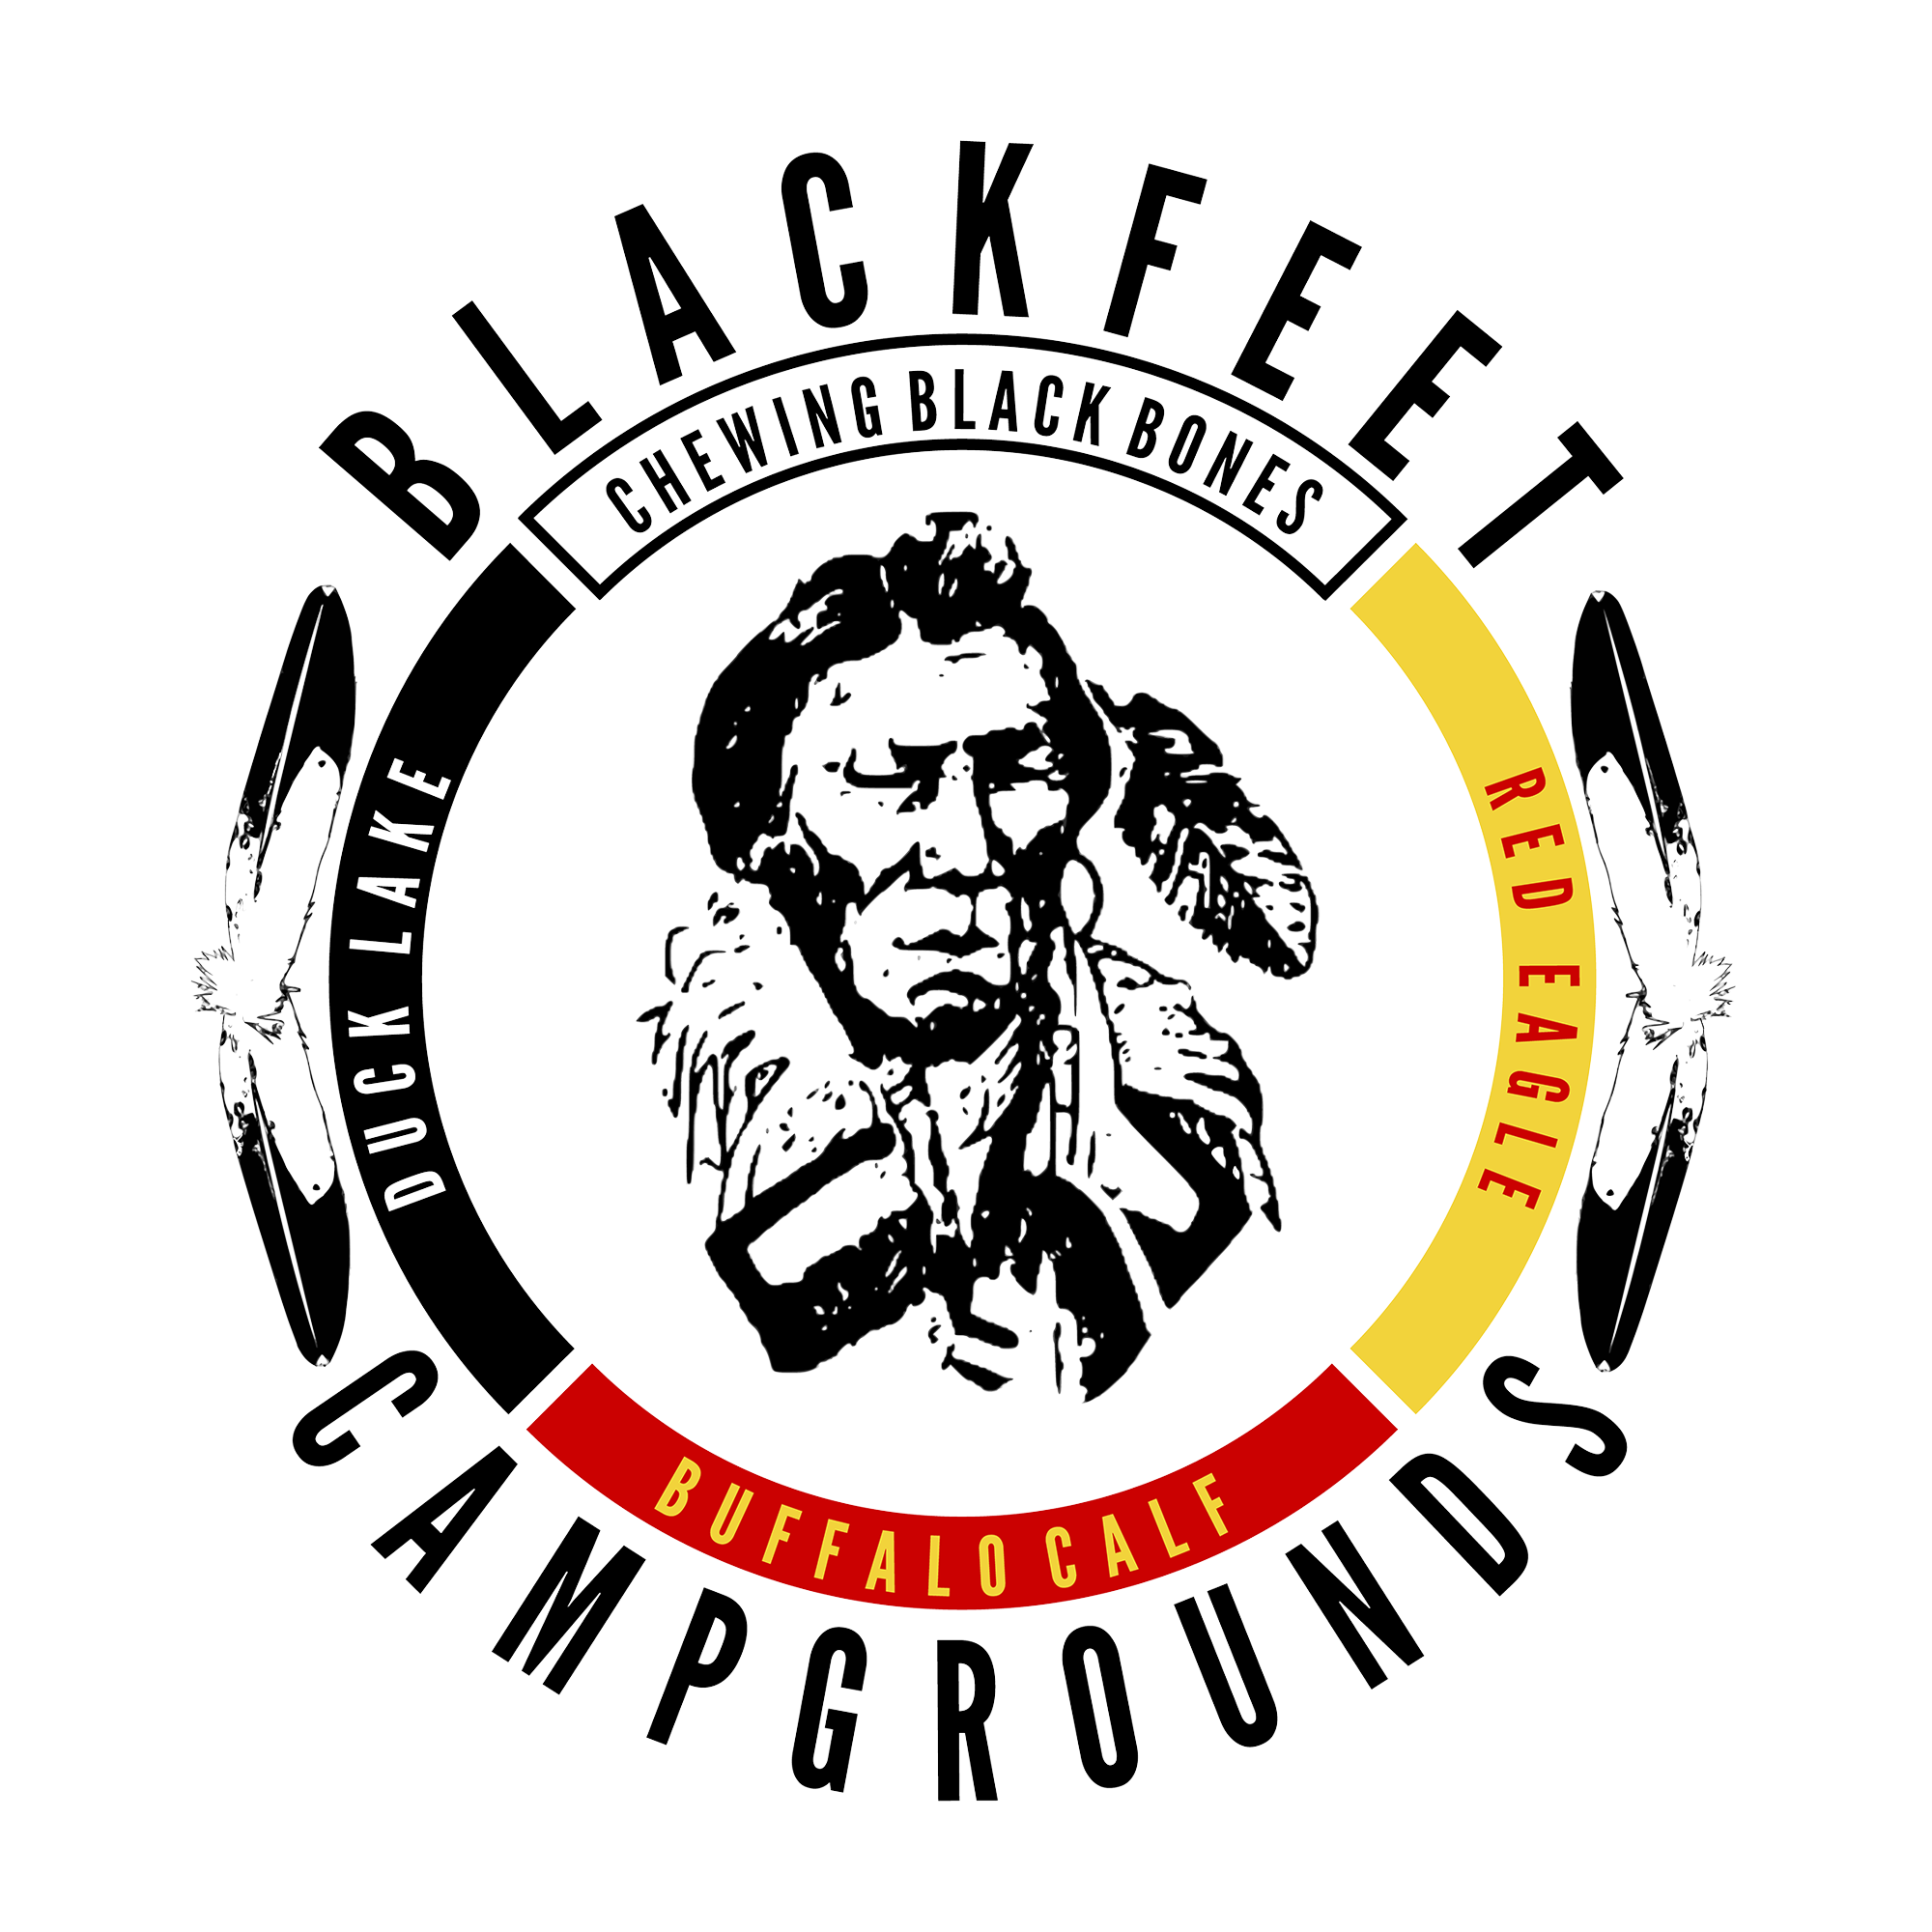 Blackfeet Campgrounds